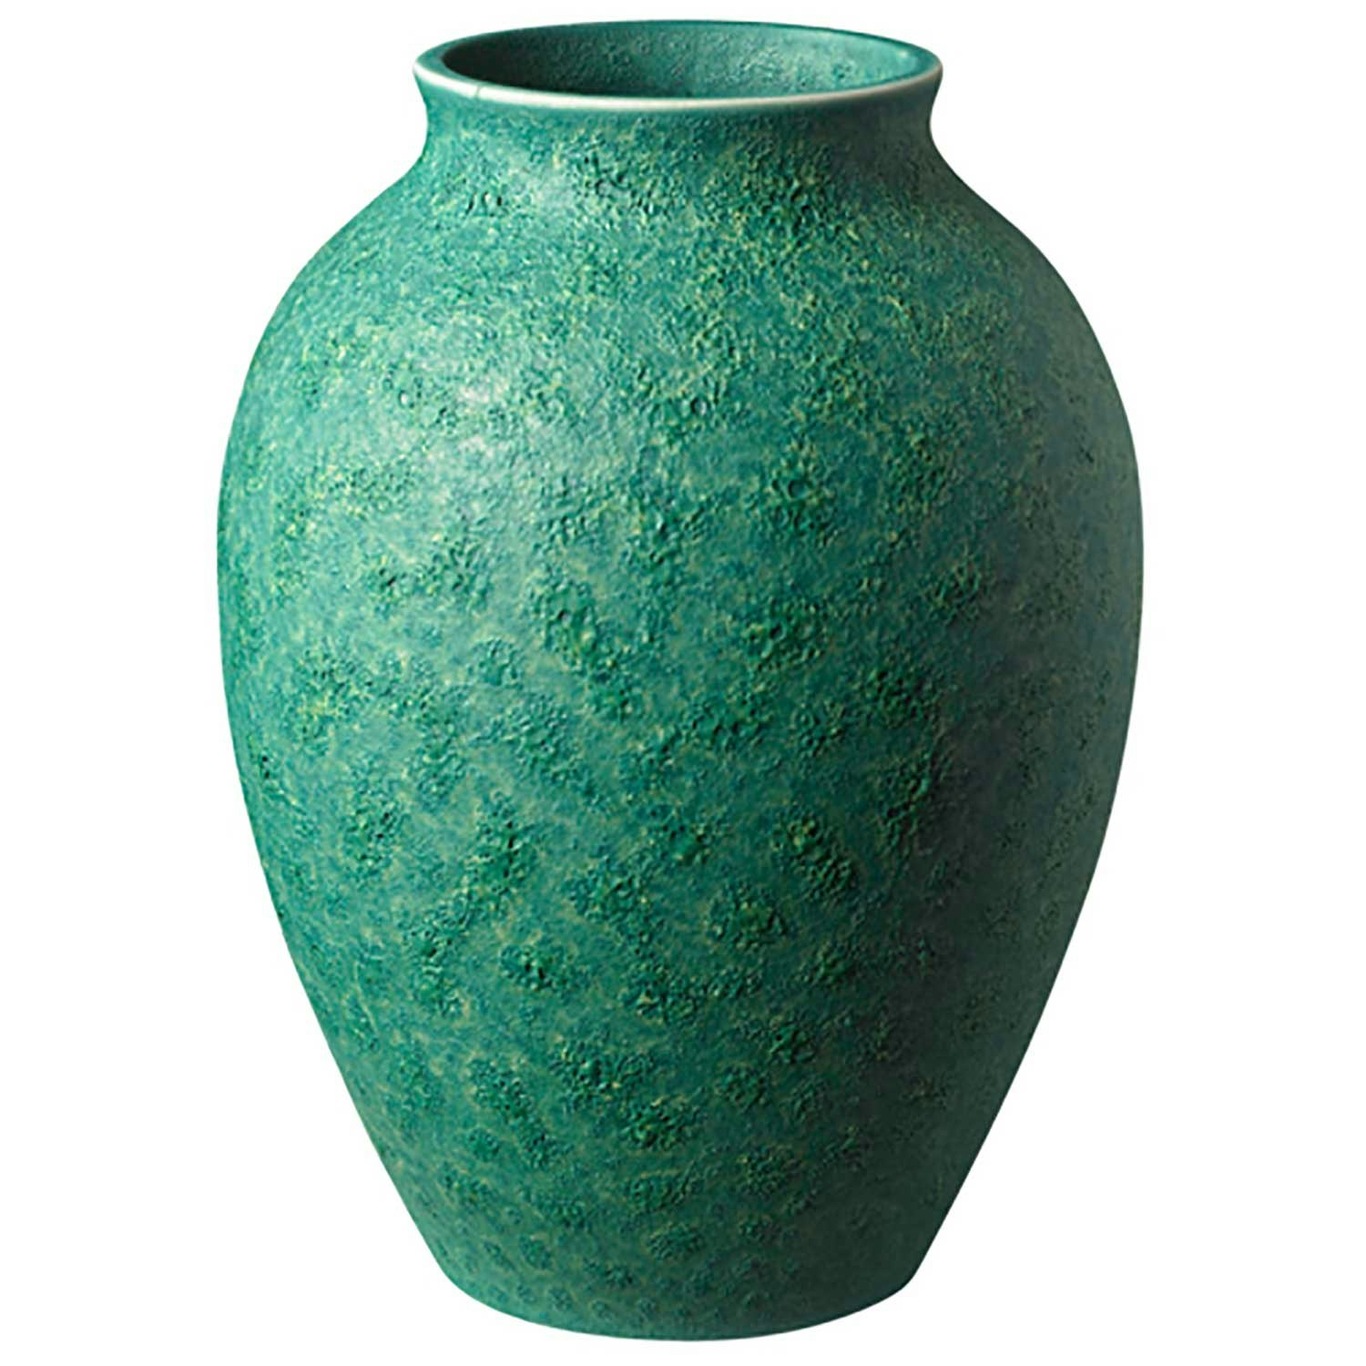 https://royaldesign.com/image/2/knabstrup-keramik-vase-green-8?w=800&quality=80